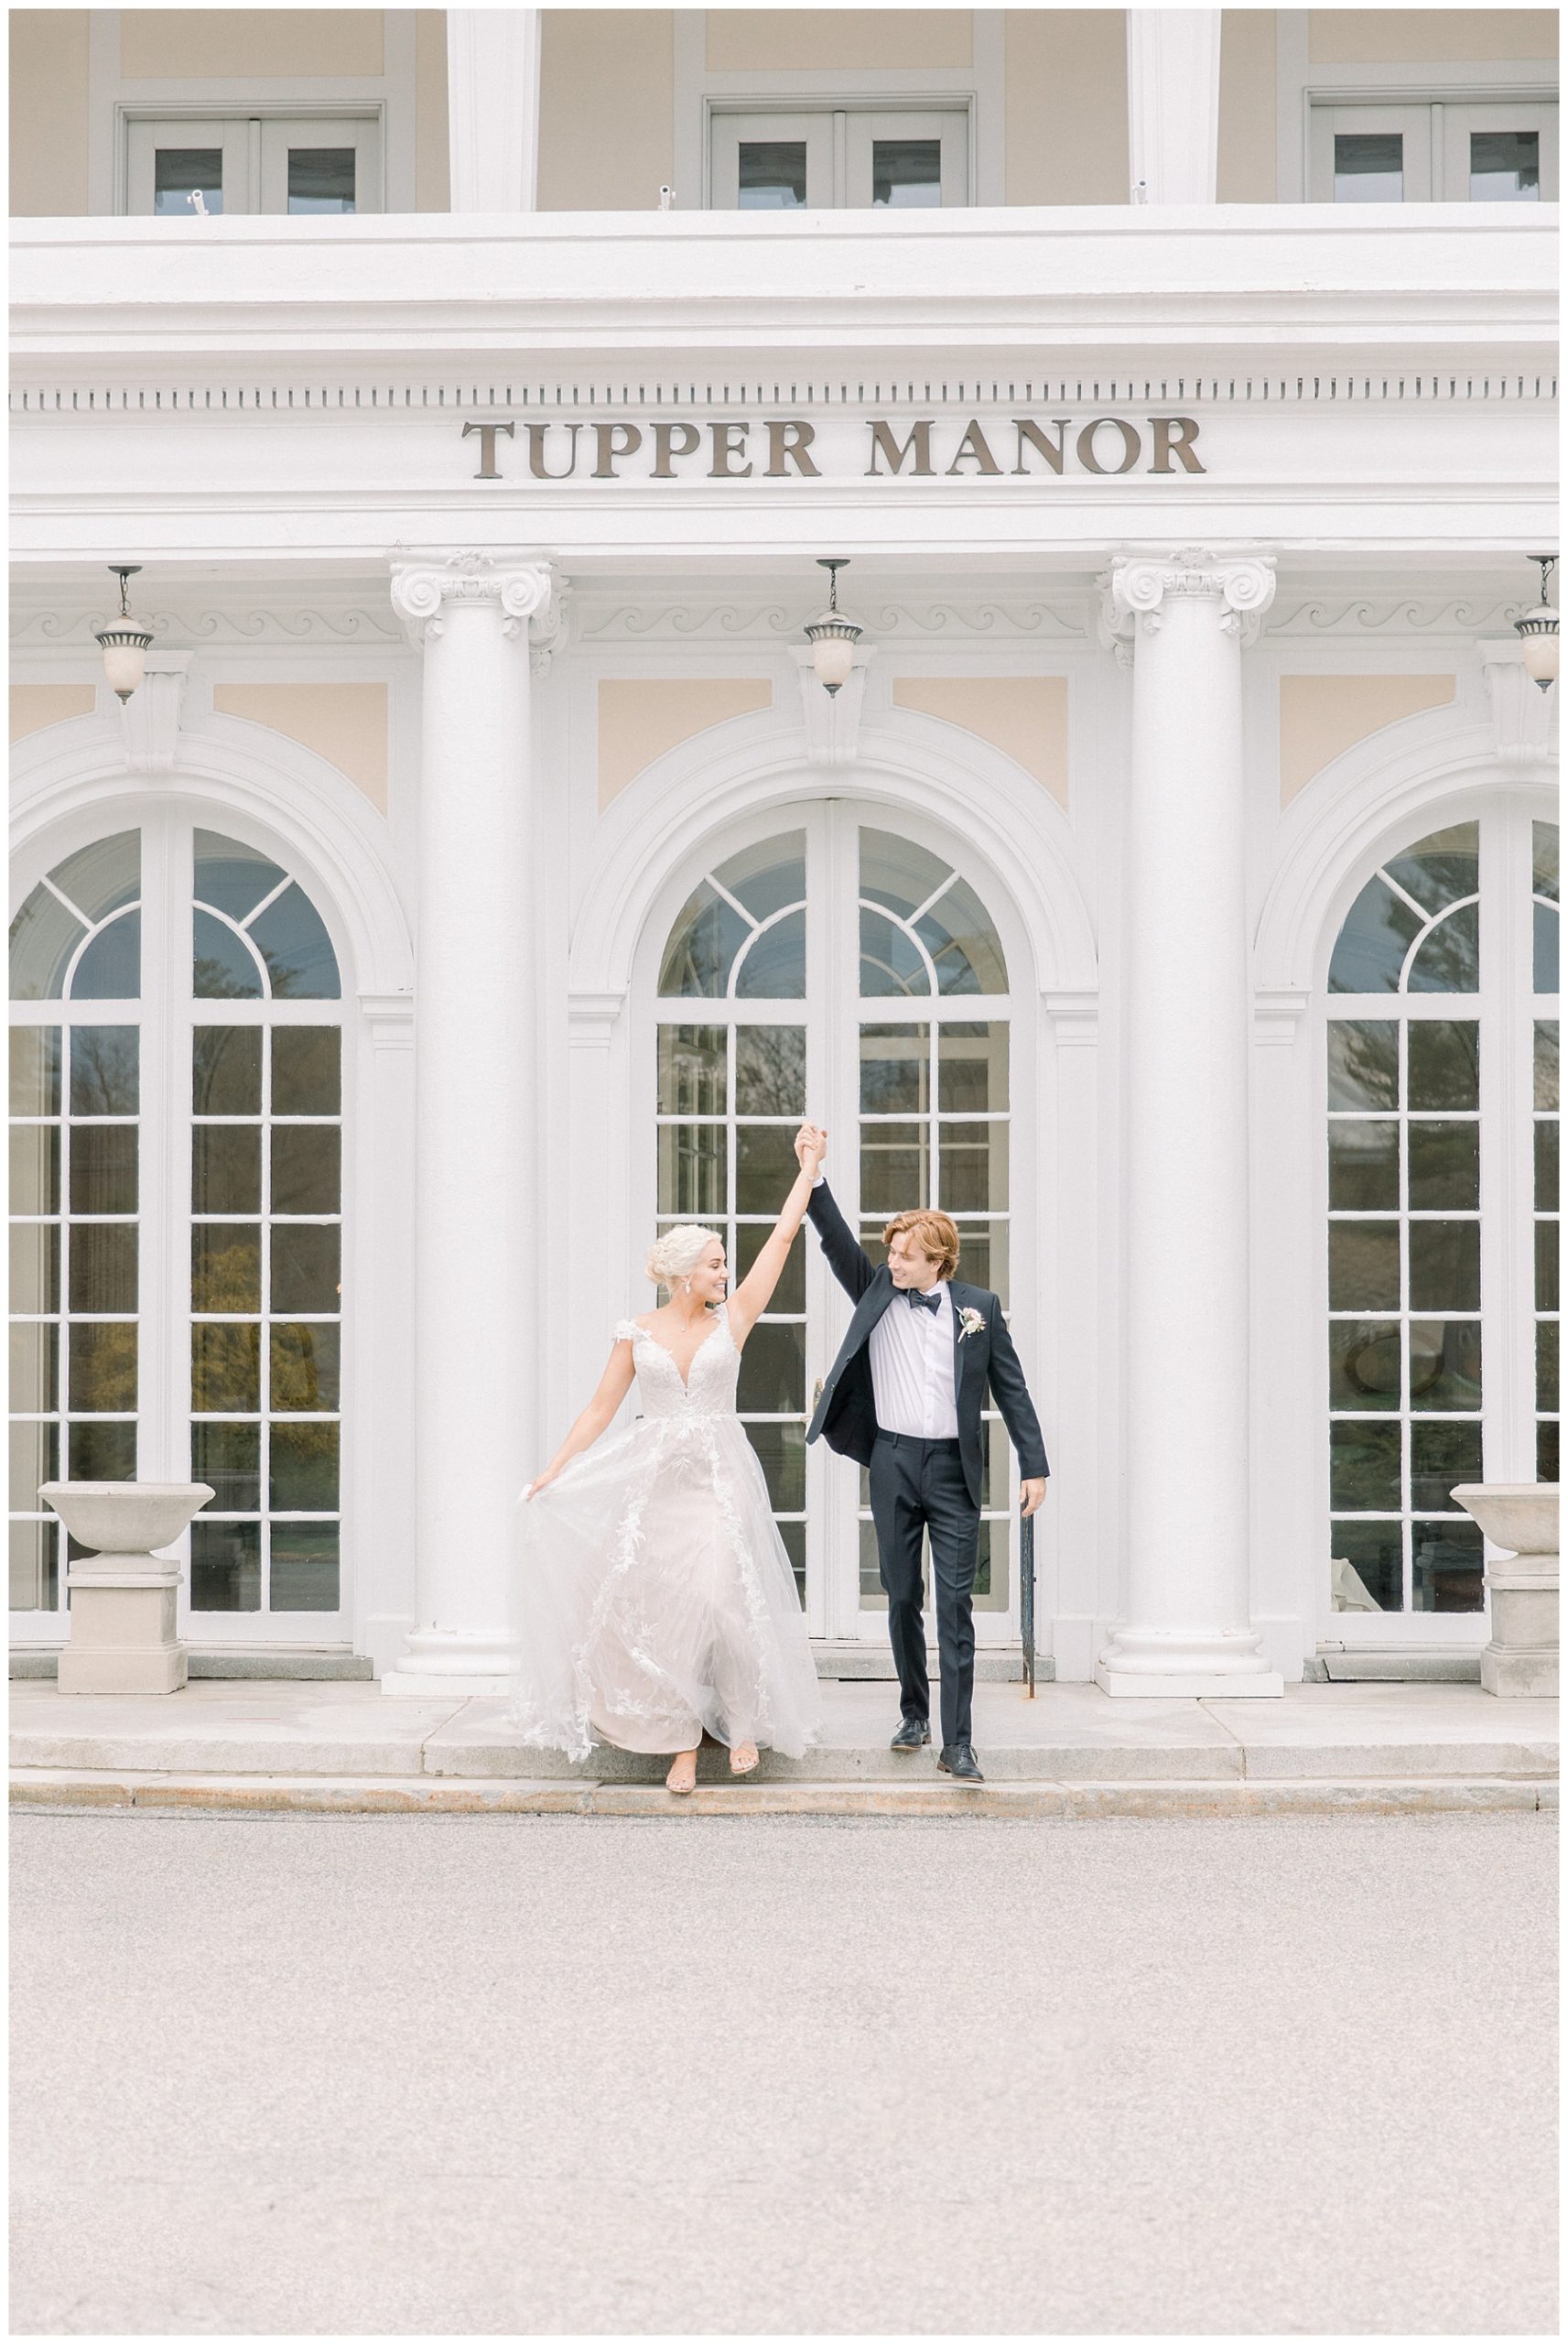 Tupper Manor Wedding | A Romantic Modern European Inspired Wedding Editorial